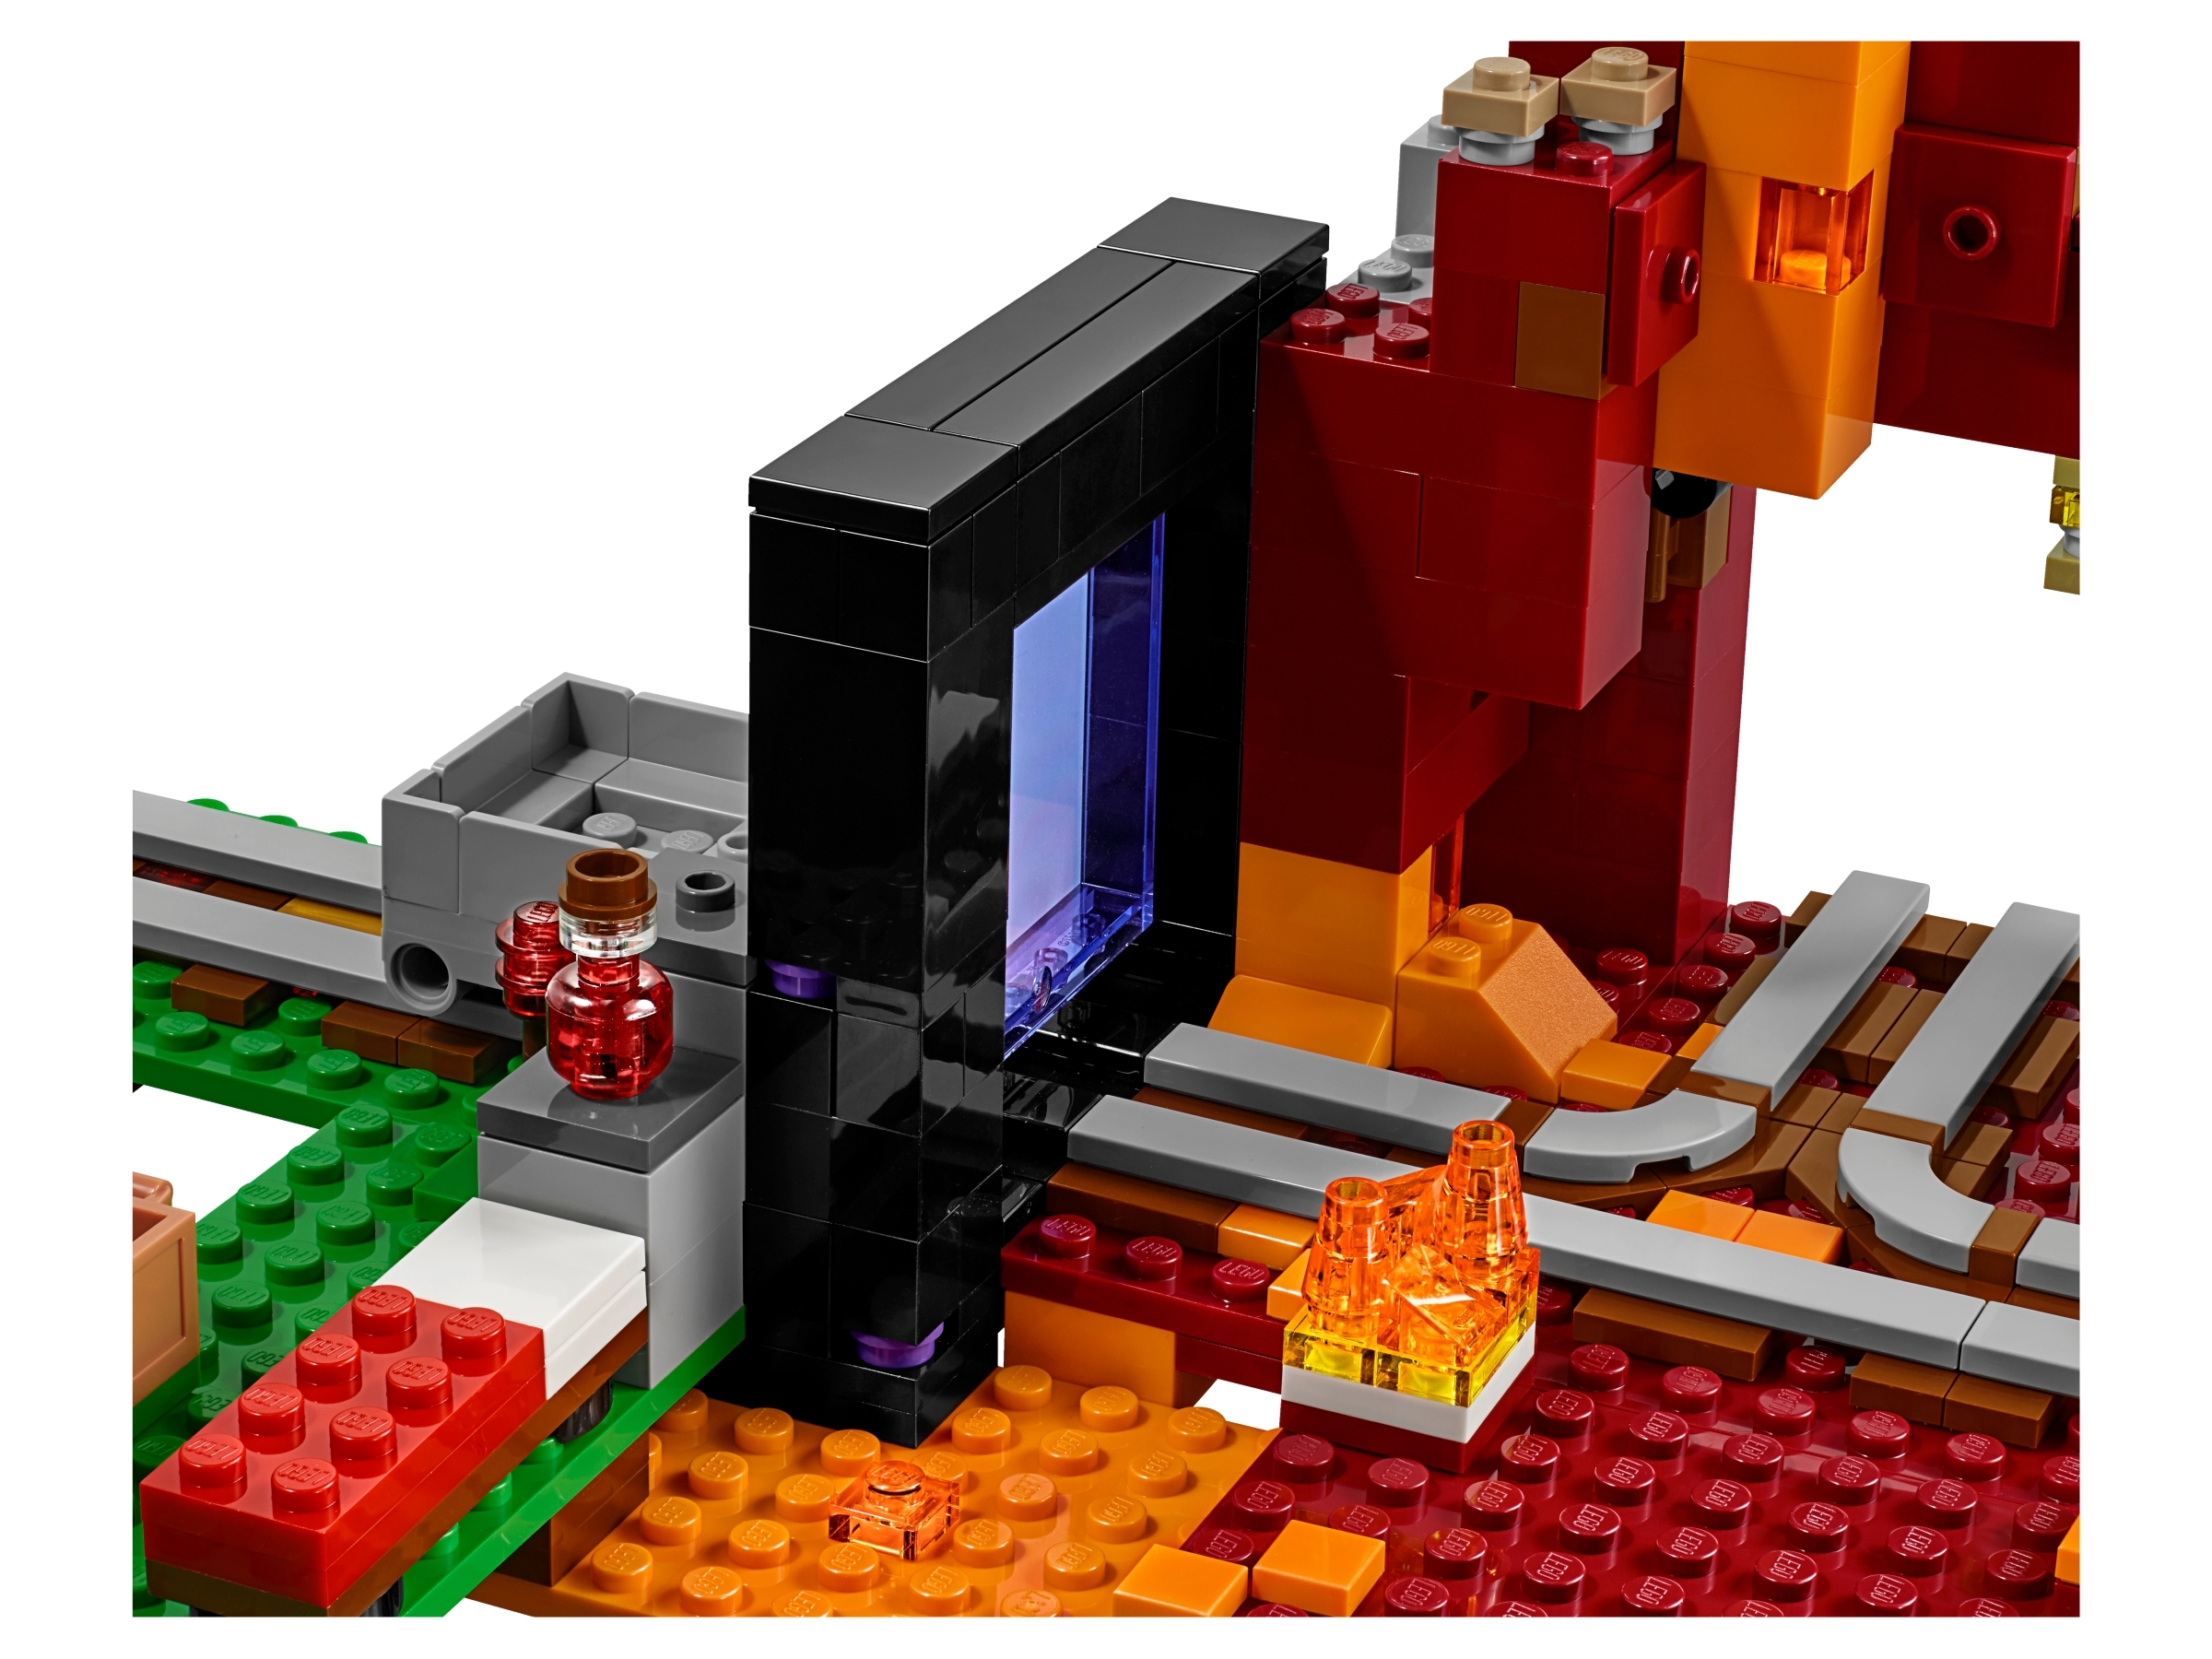 LEGO Minecraft The Nether Portal 21143 Building Kit 470 Piece 